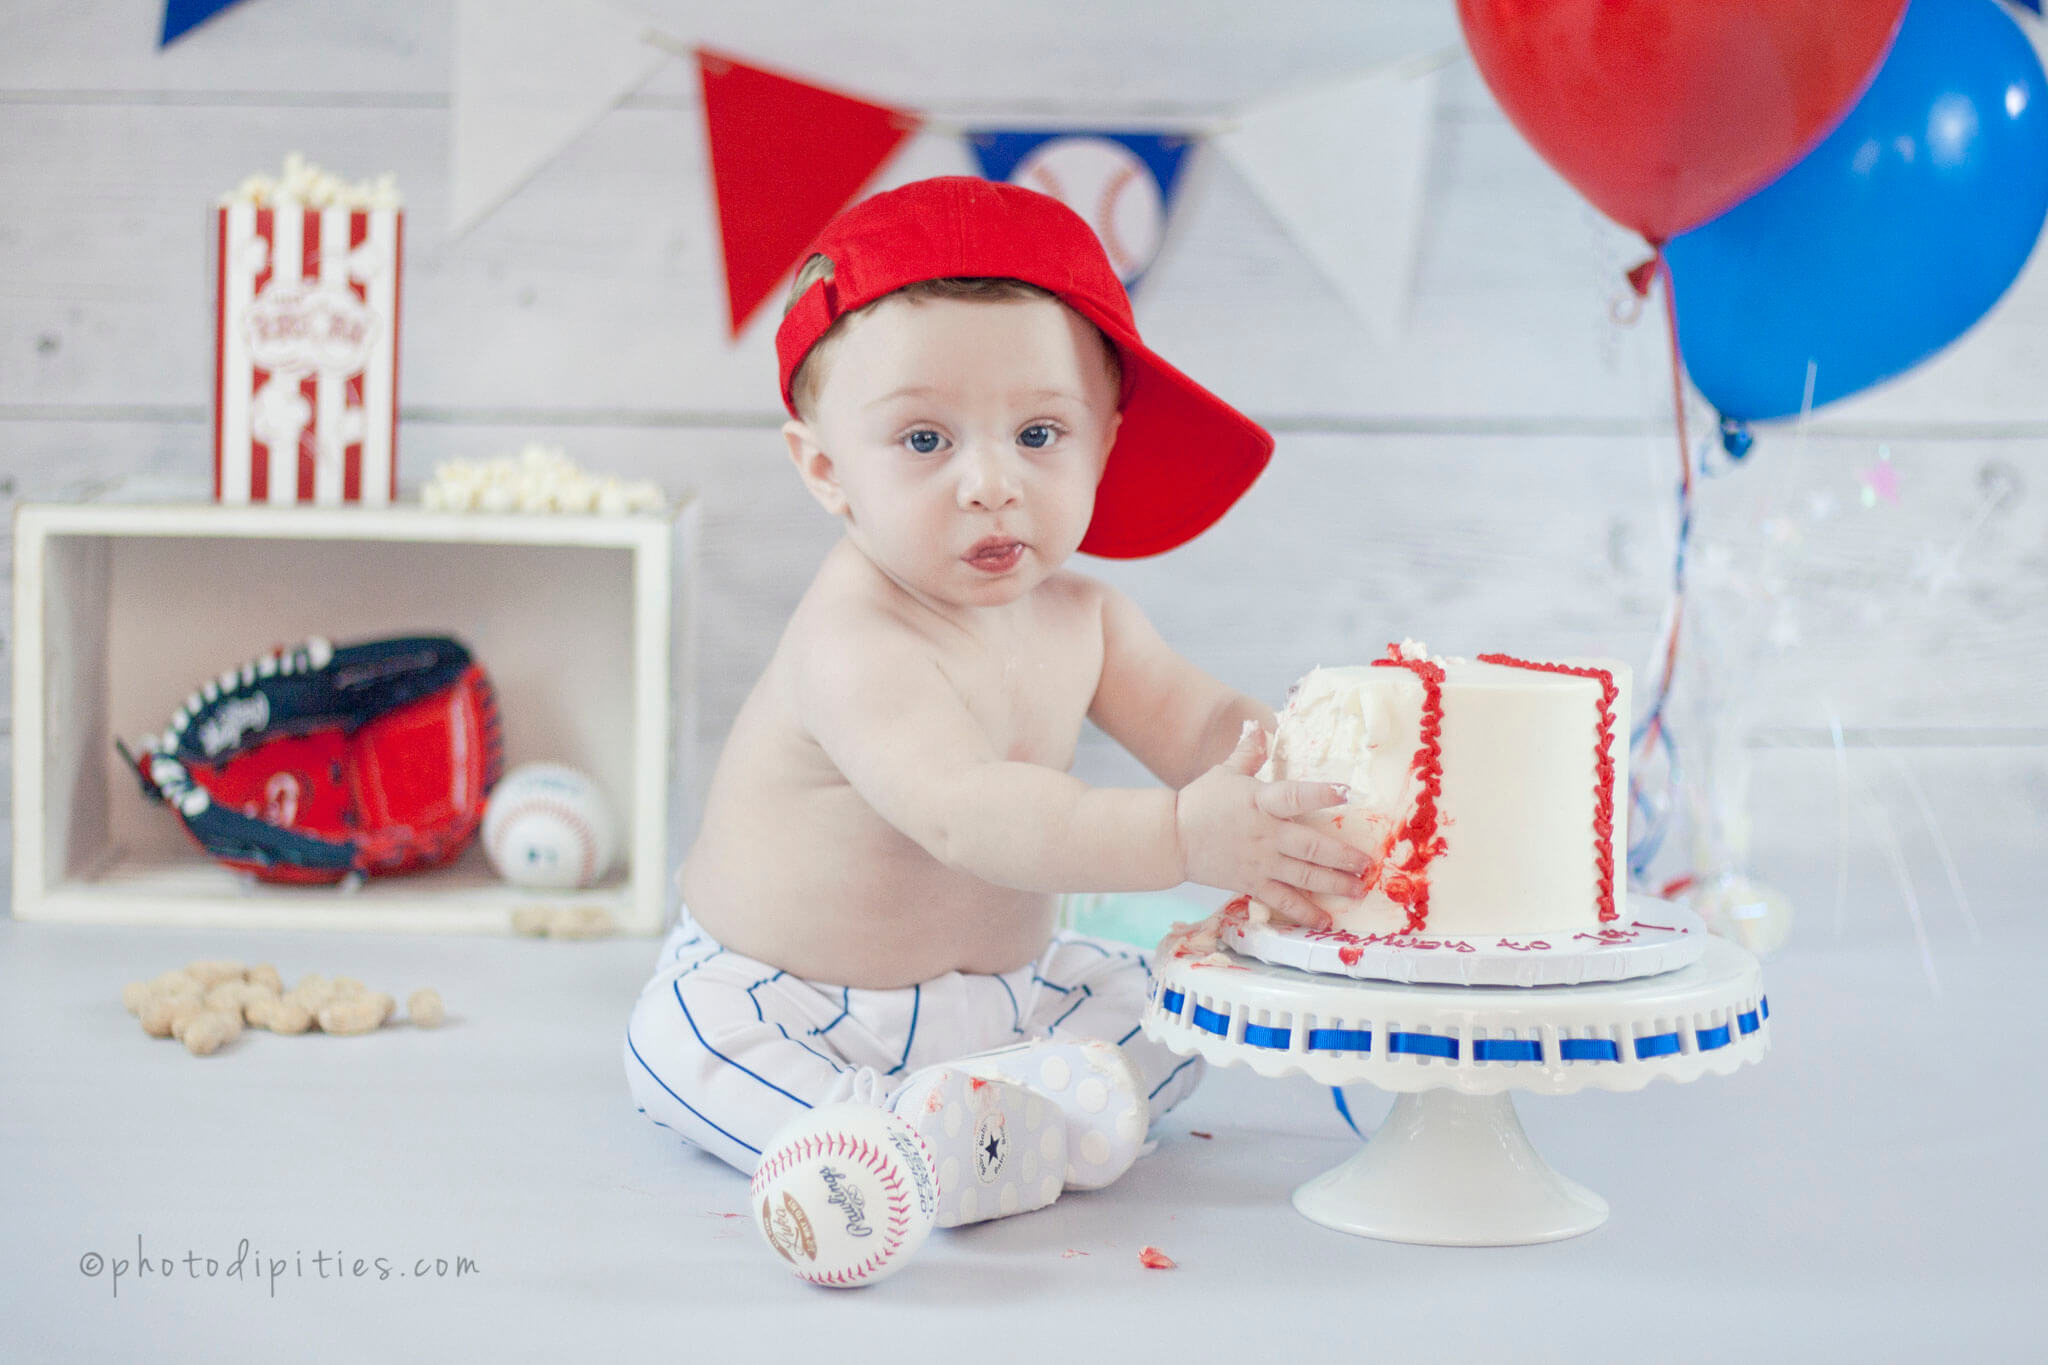 Photodipities Family | Baby Photography - Half Birthday Cake Smash